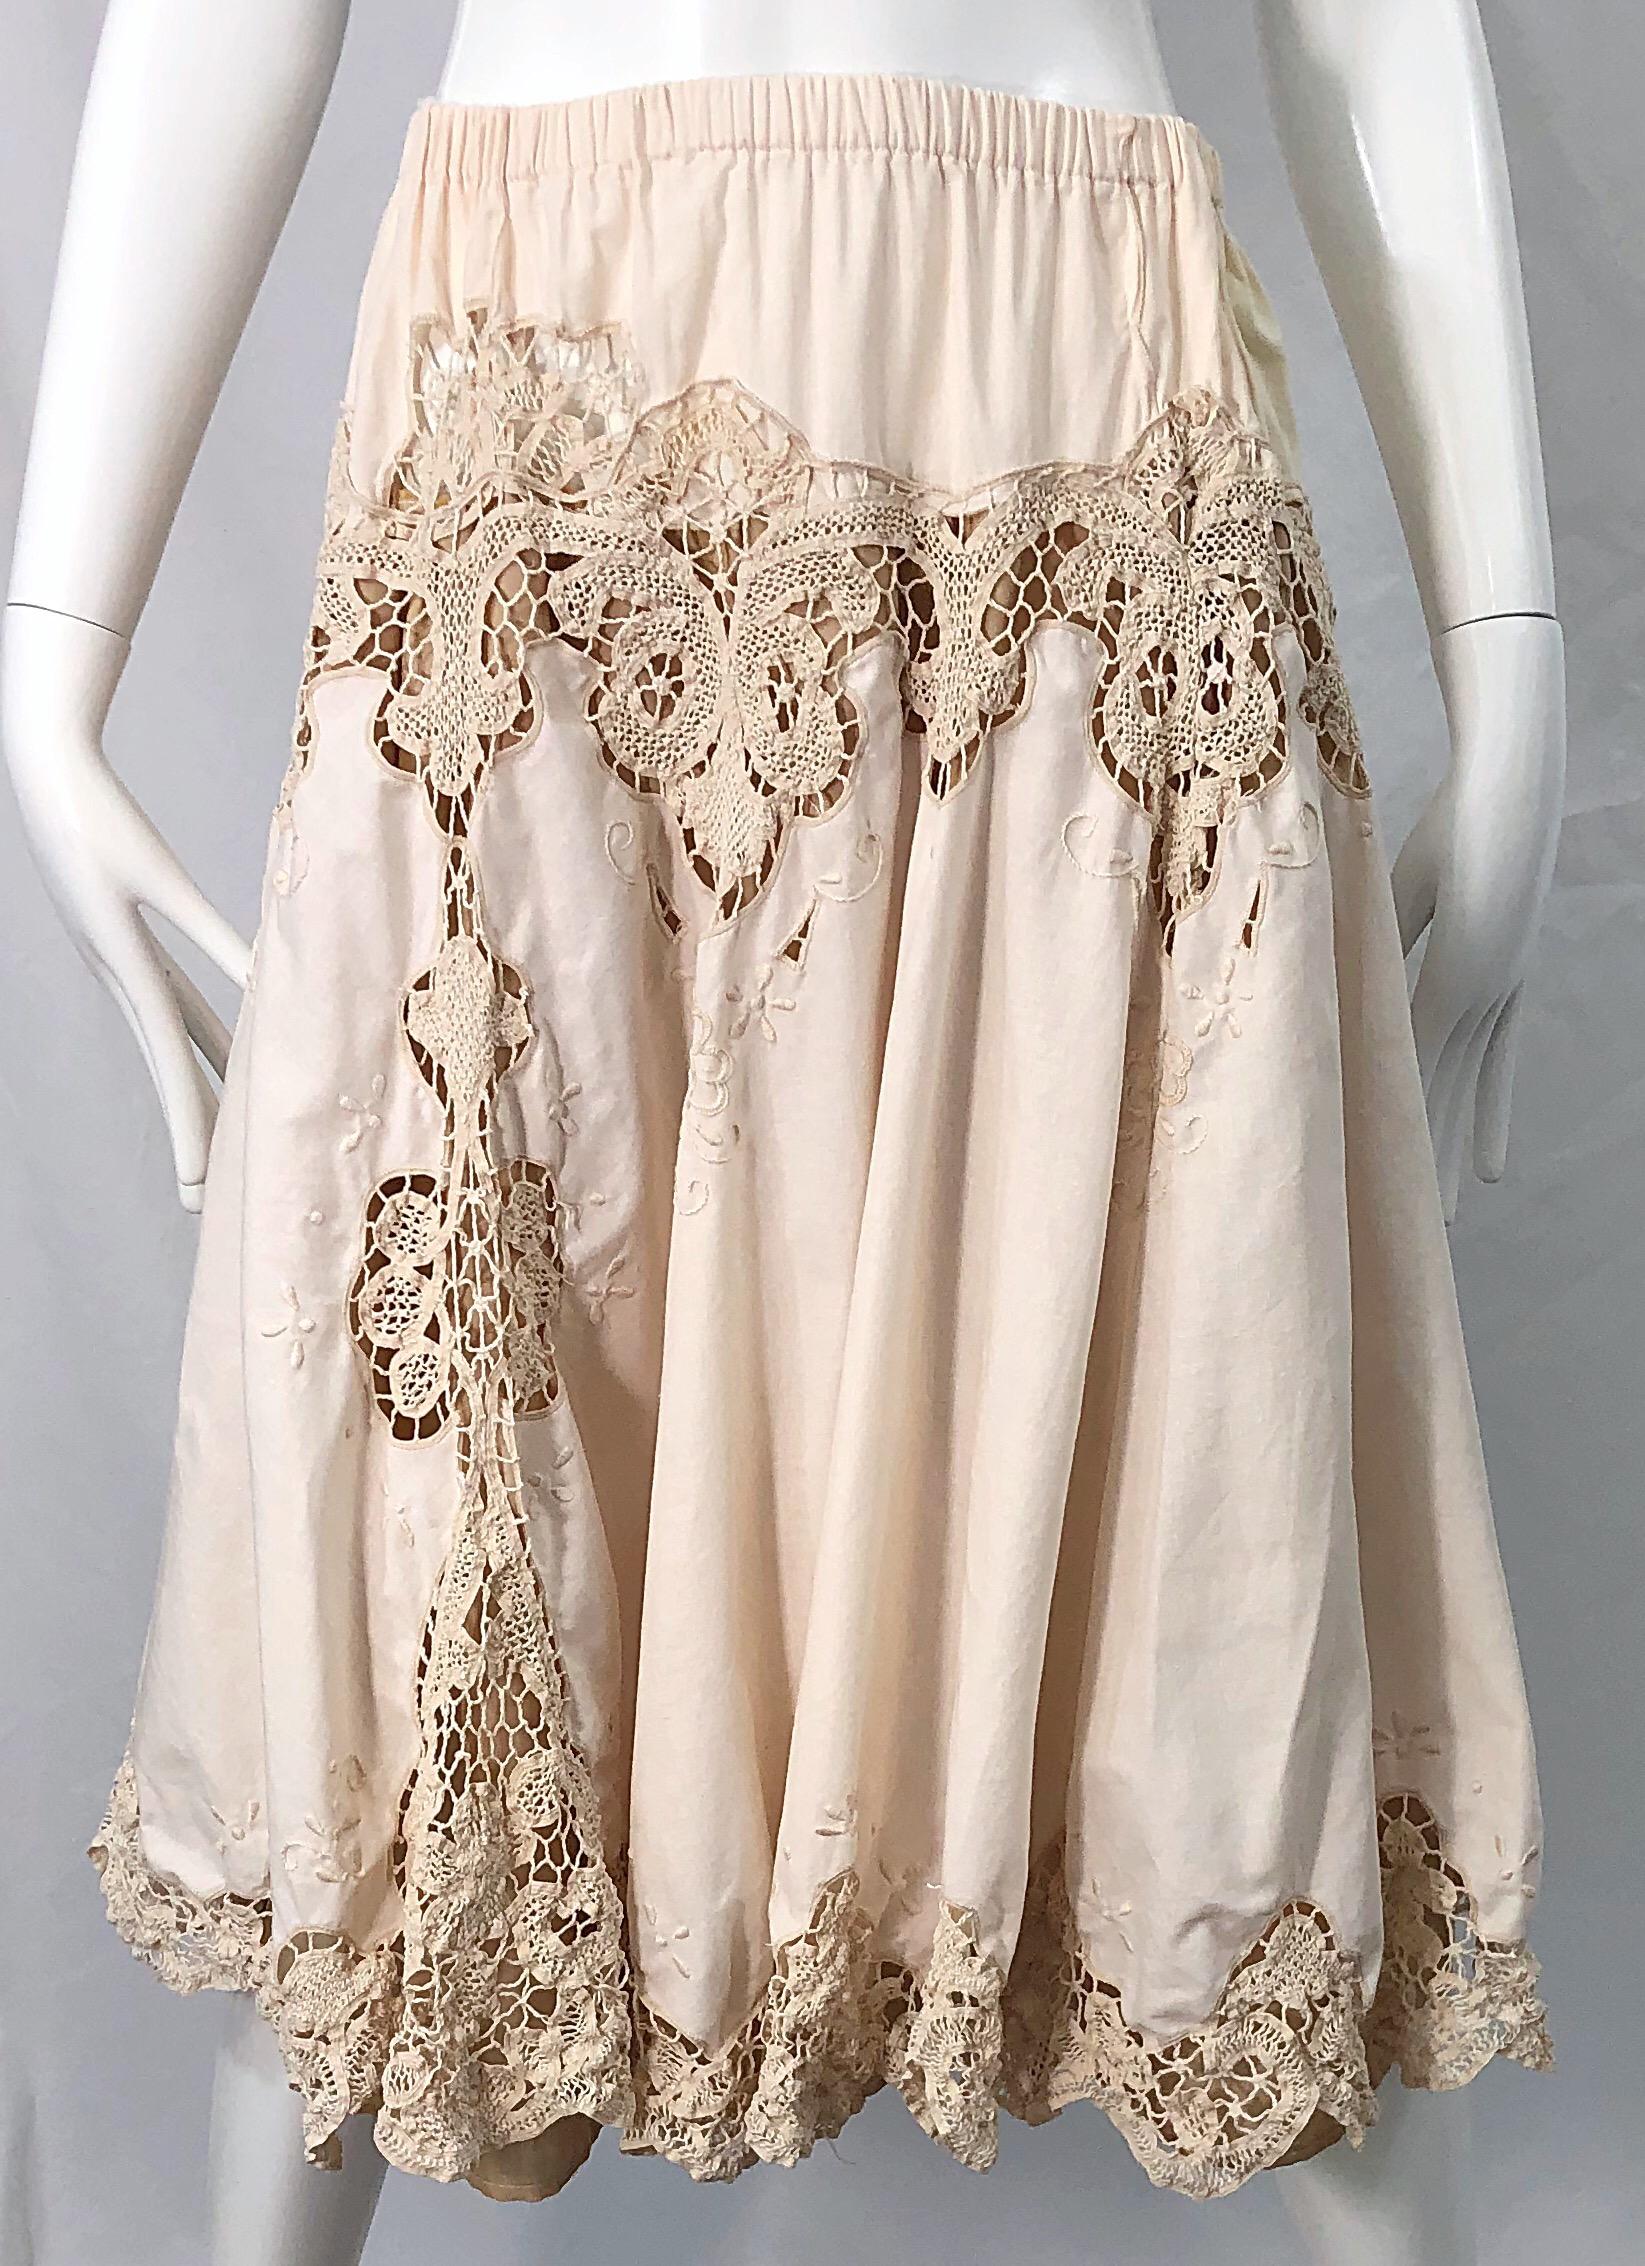 1980s Ivory Cotton Crochet Boho Shirt / Skirt Vintage 80s Dress Ensemble Set 1